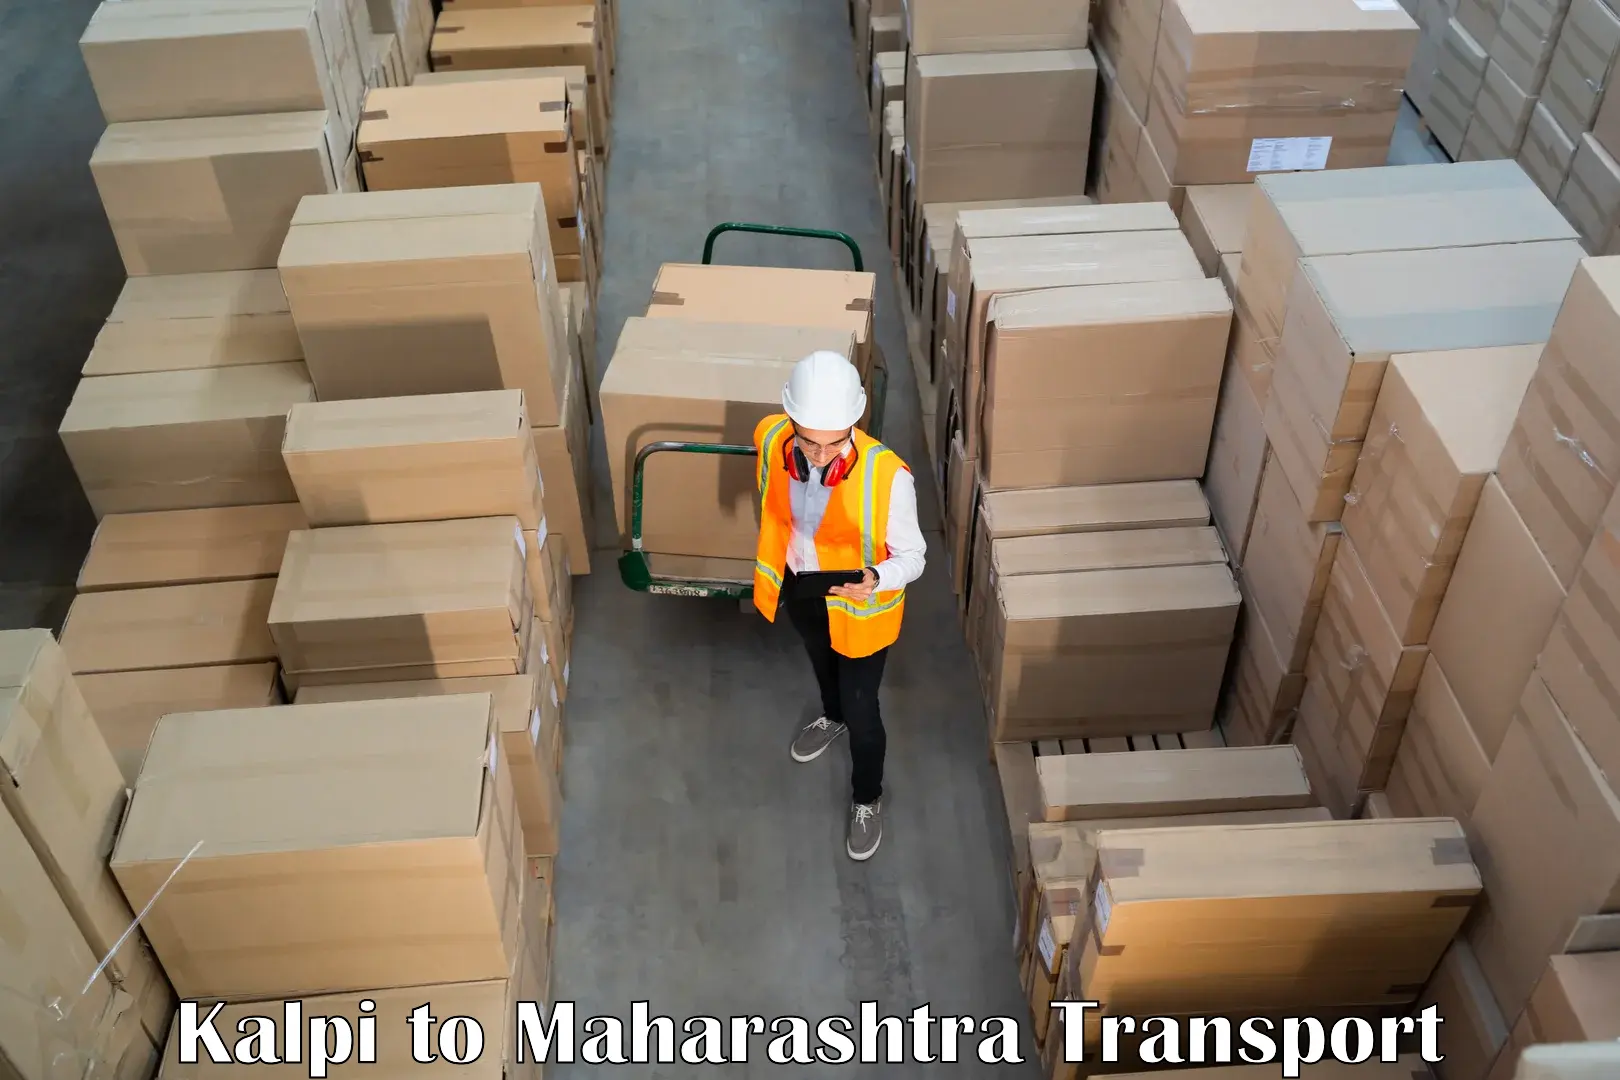 Vehicle transport services in Kalpi to Maharashtra